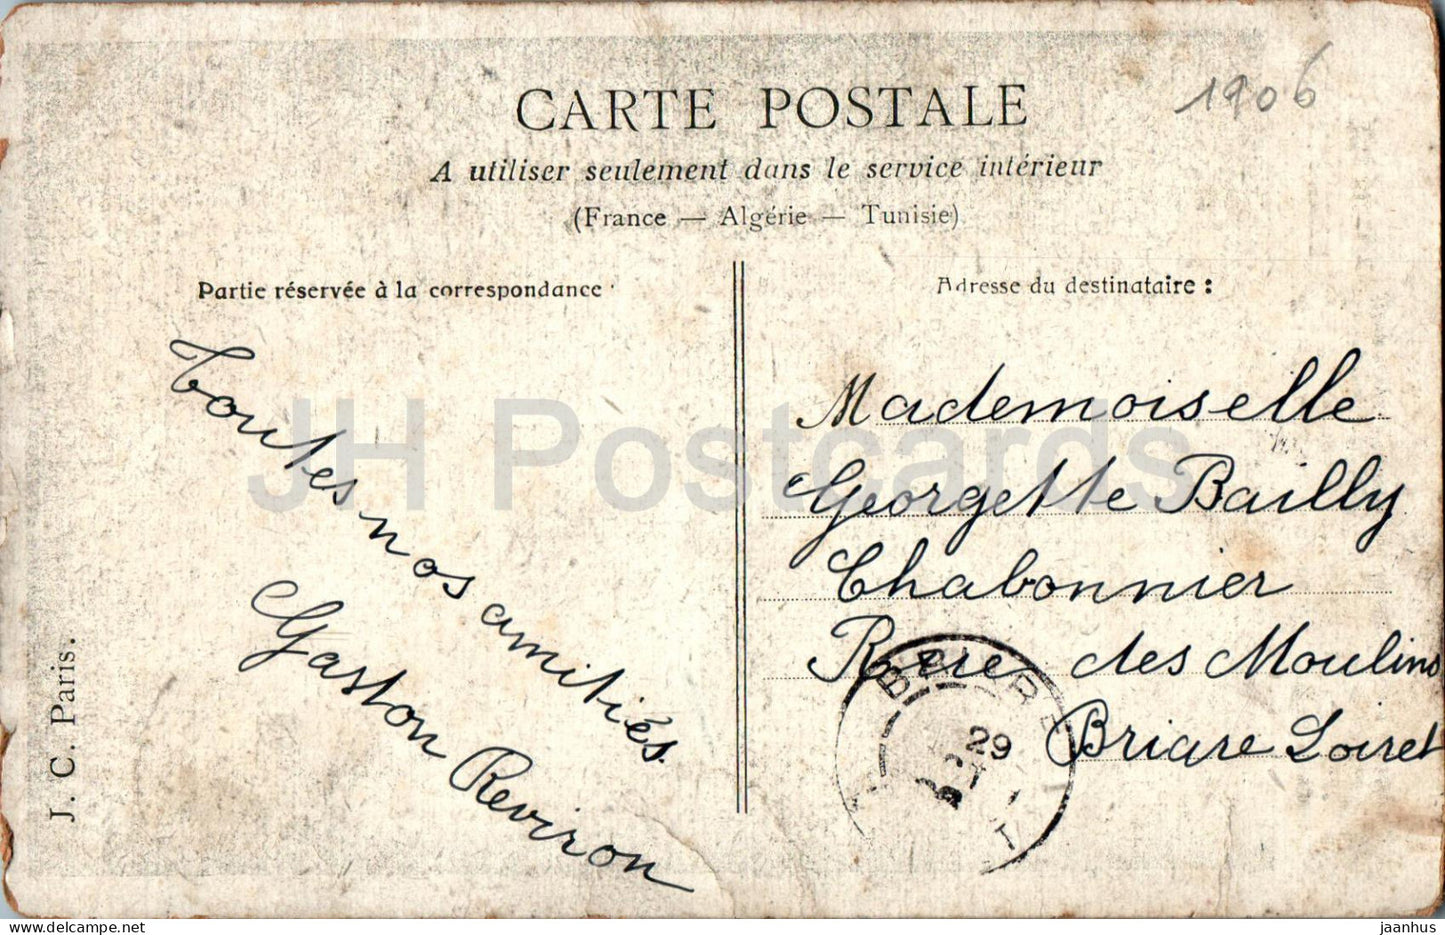 Charette Fleurie - fille - carte postale ancienne - 1906 - France - occasion 